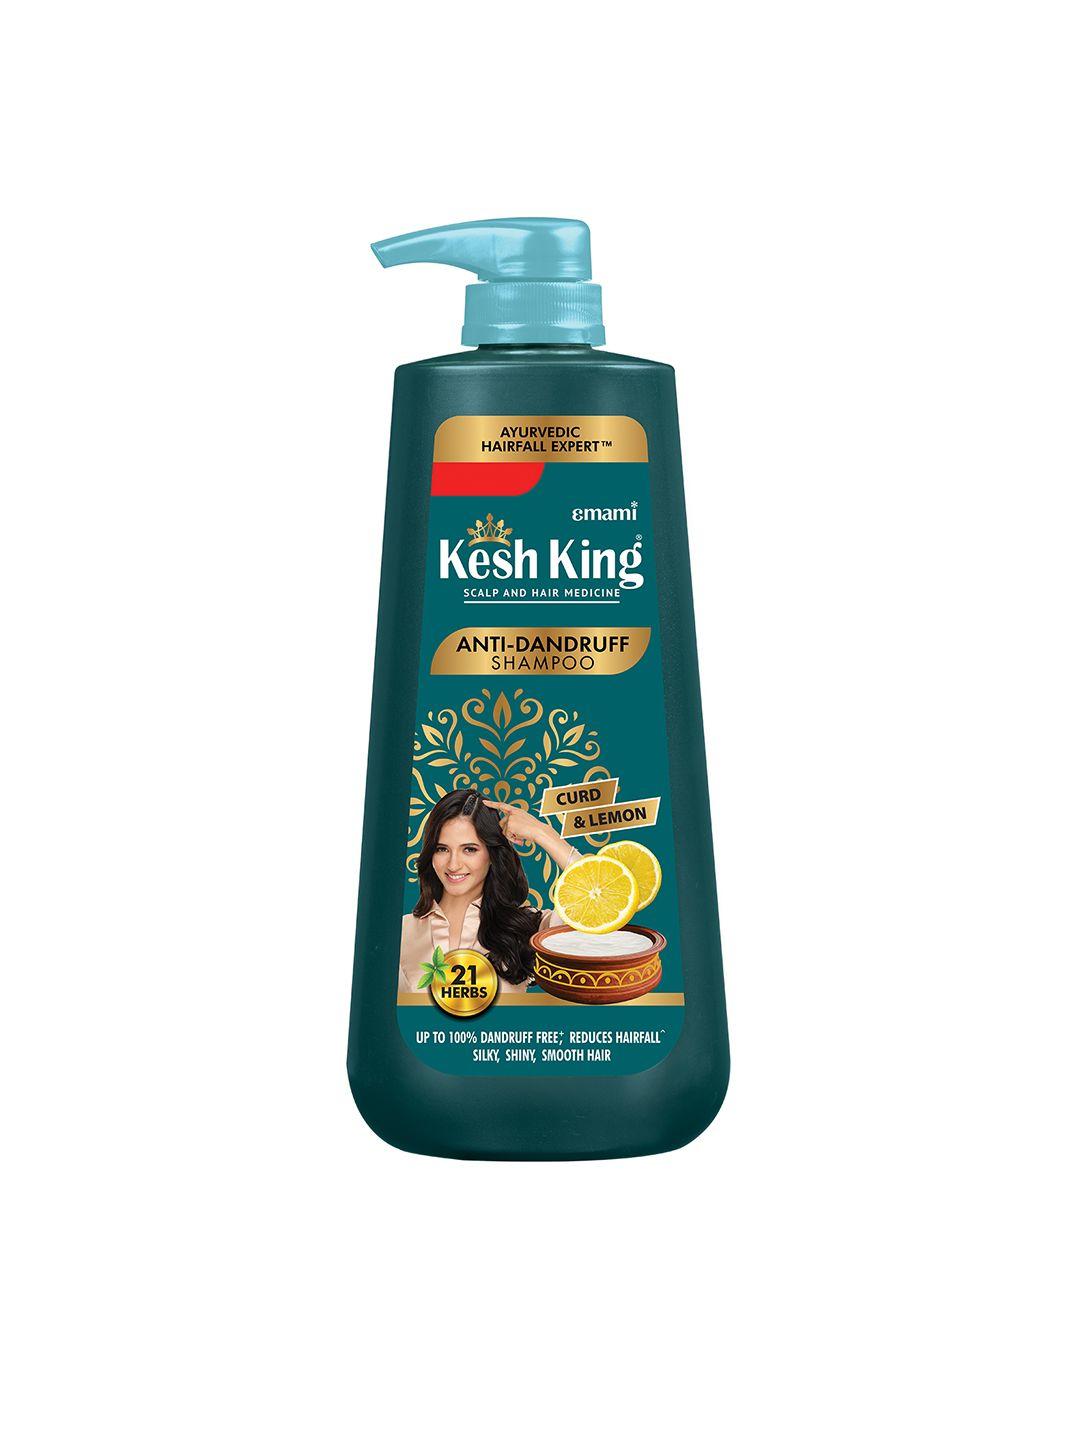 kesh king ayurvedic hairfall expert anti-dandruff shampoo with curd active & 21 herbs - 1l